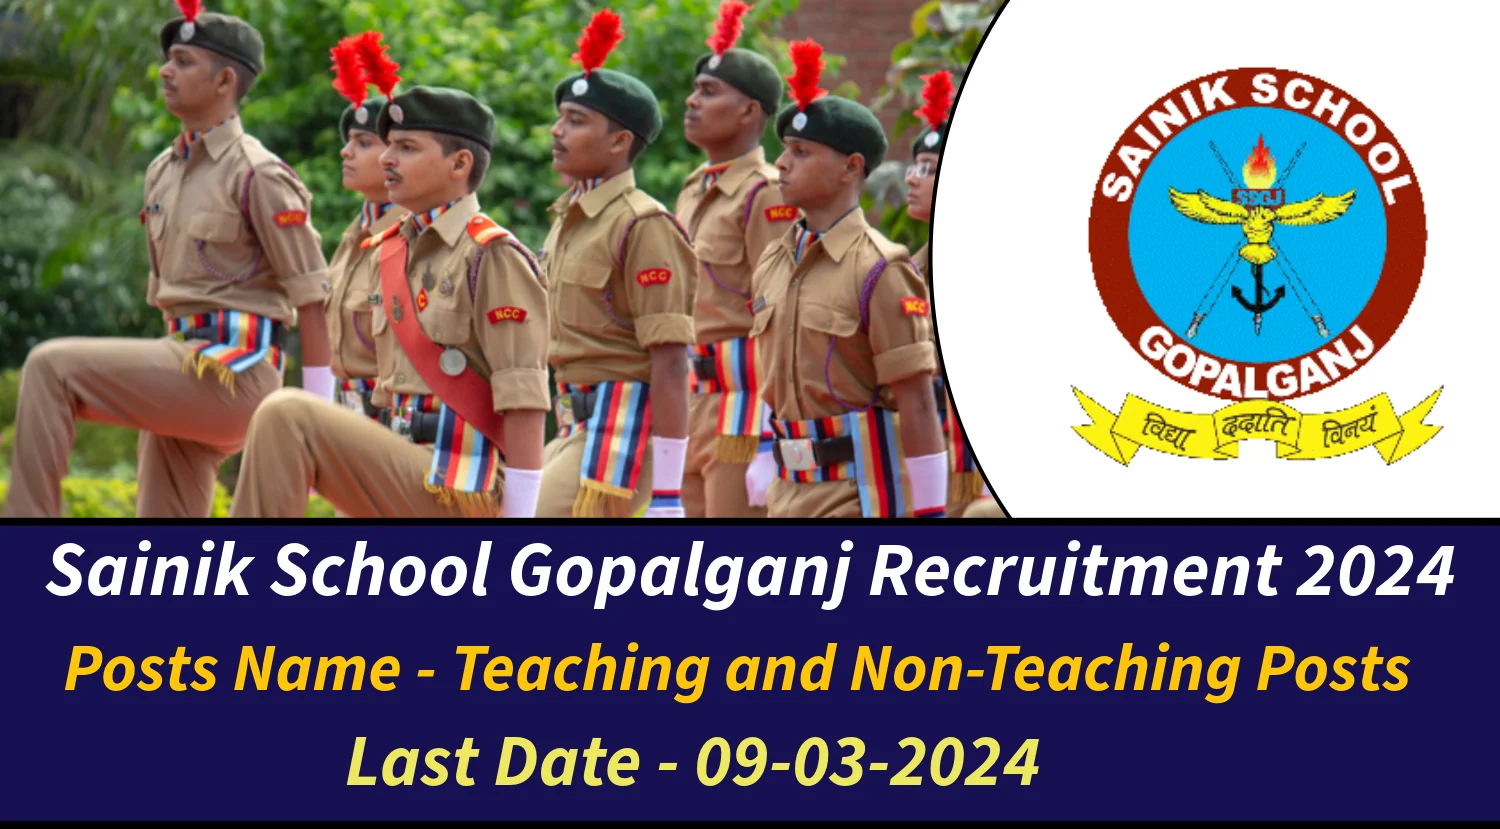 Sainik School Gopalganj Recruitment 2024 for Teaching and Non-Teaching Staff Posts